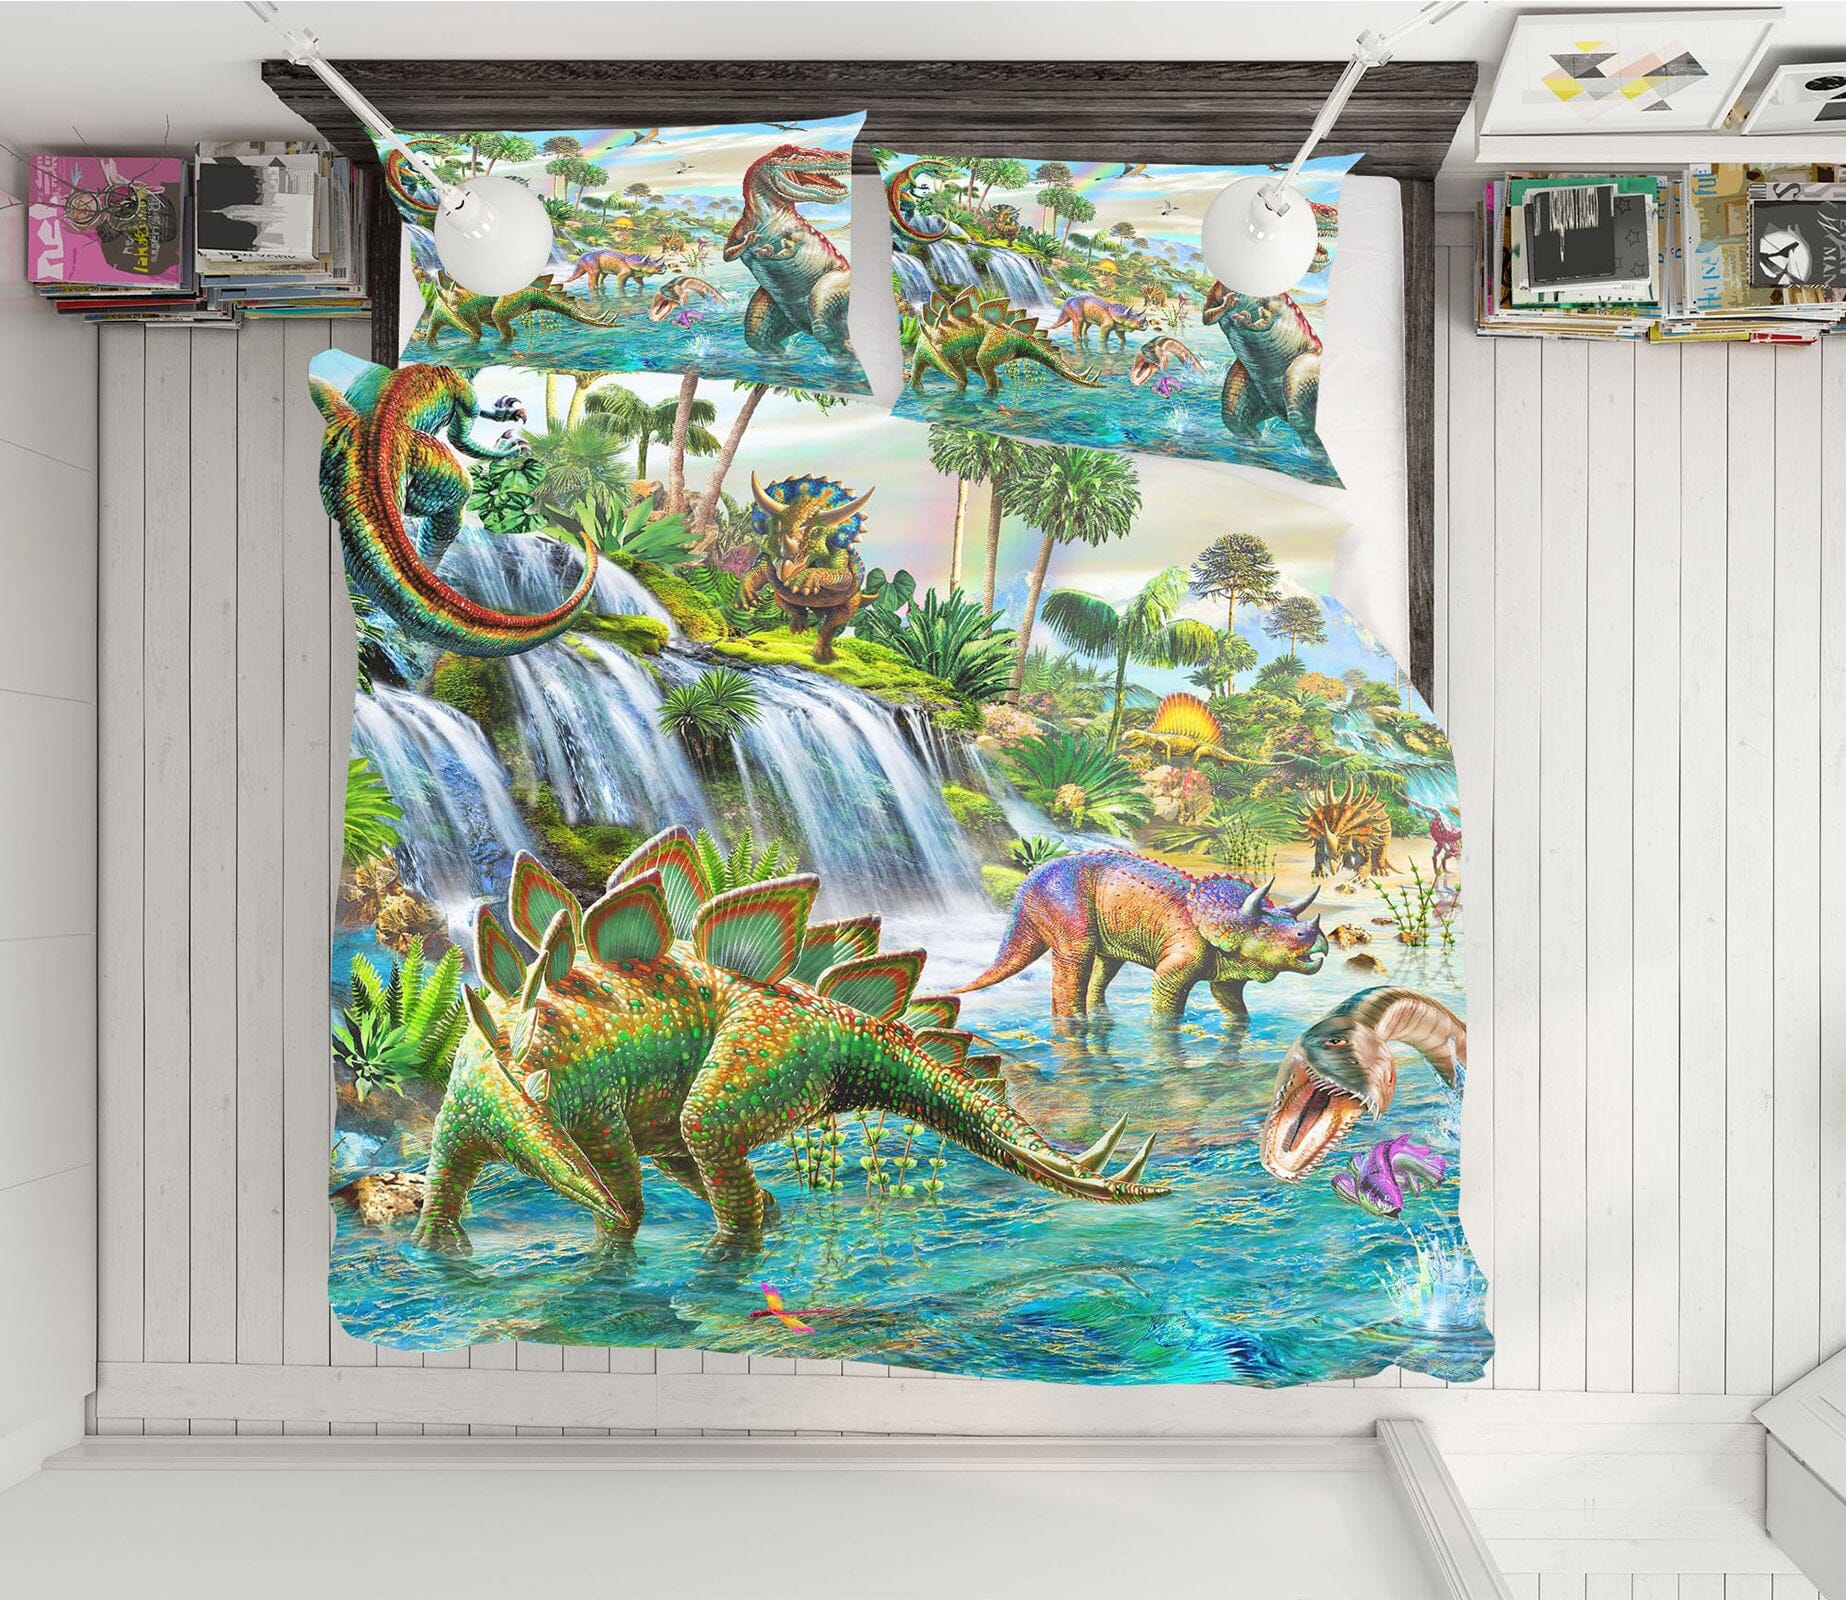 3D Dinosaur Falls 2123 Adrian Chesterman Bedding Bed Pillowcases Quilt Quiet Covers AJ Creativity Home 